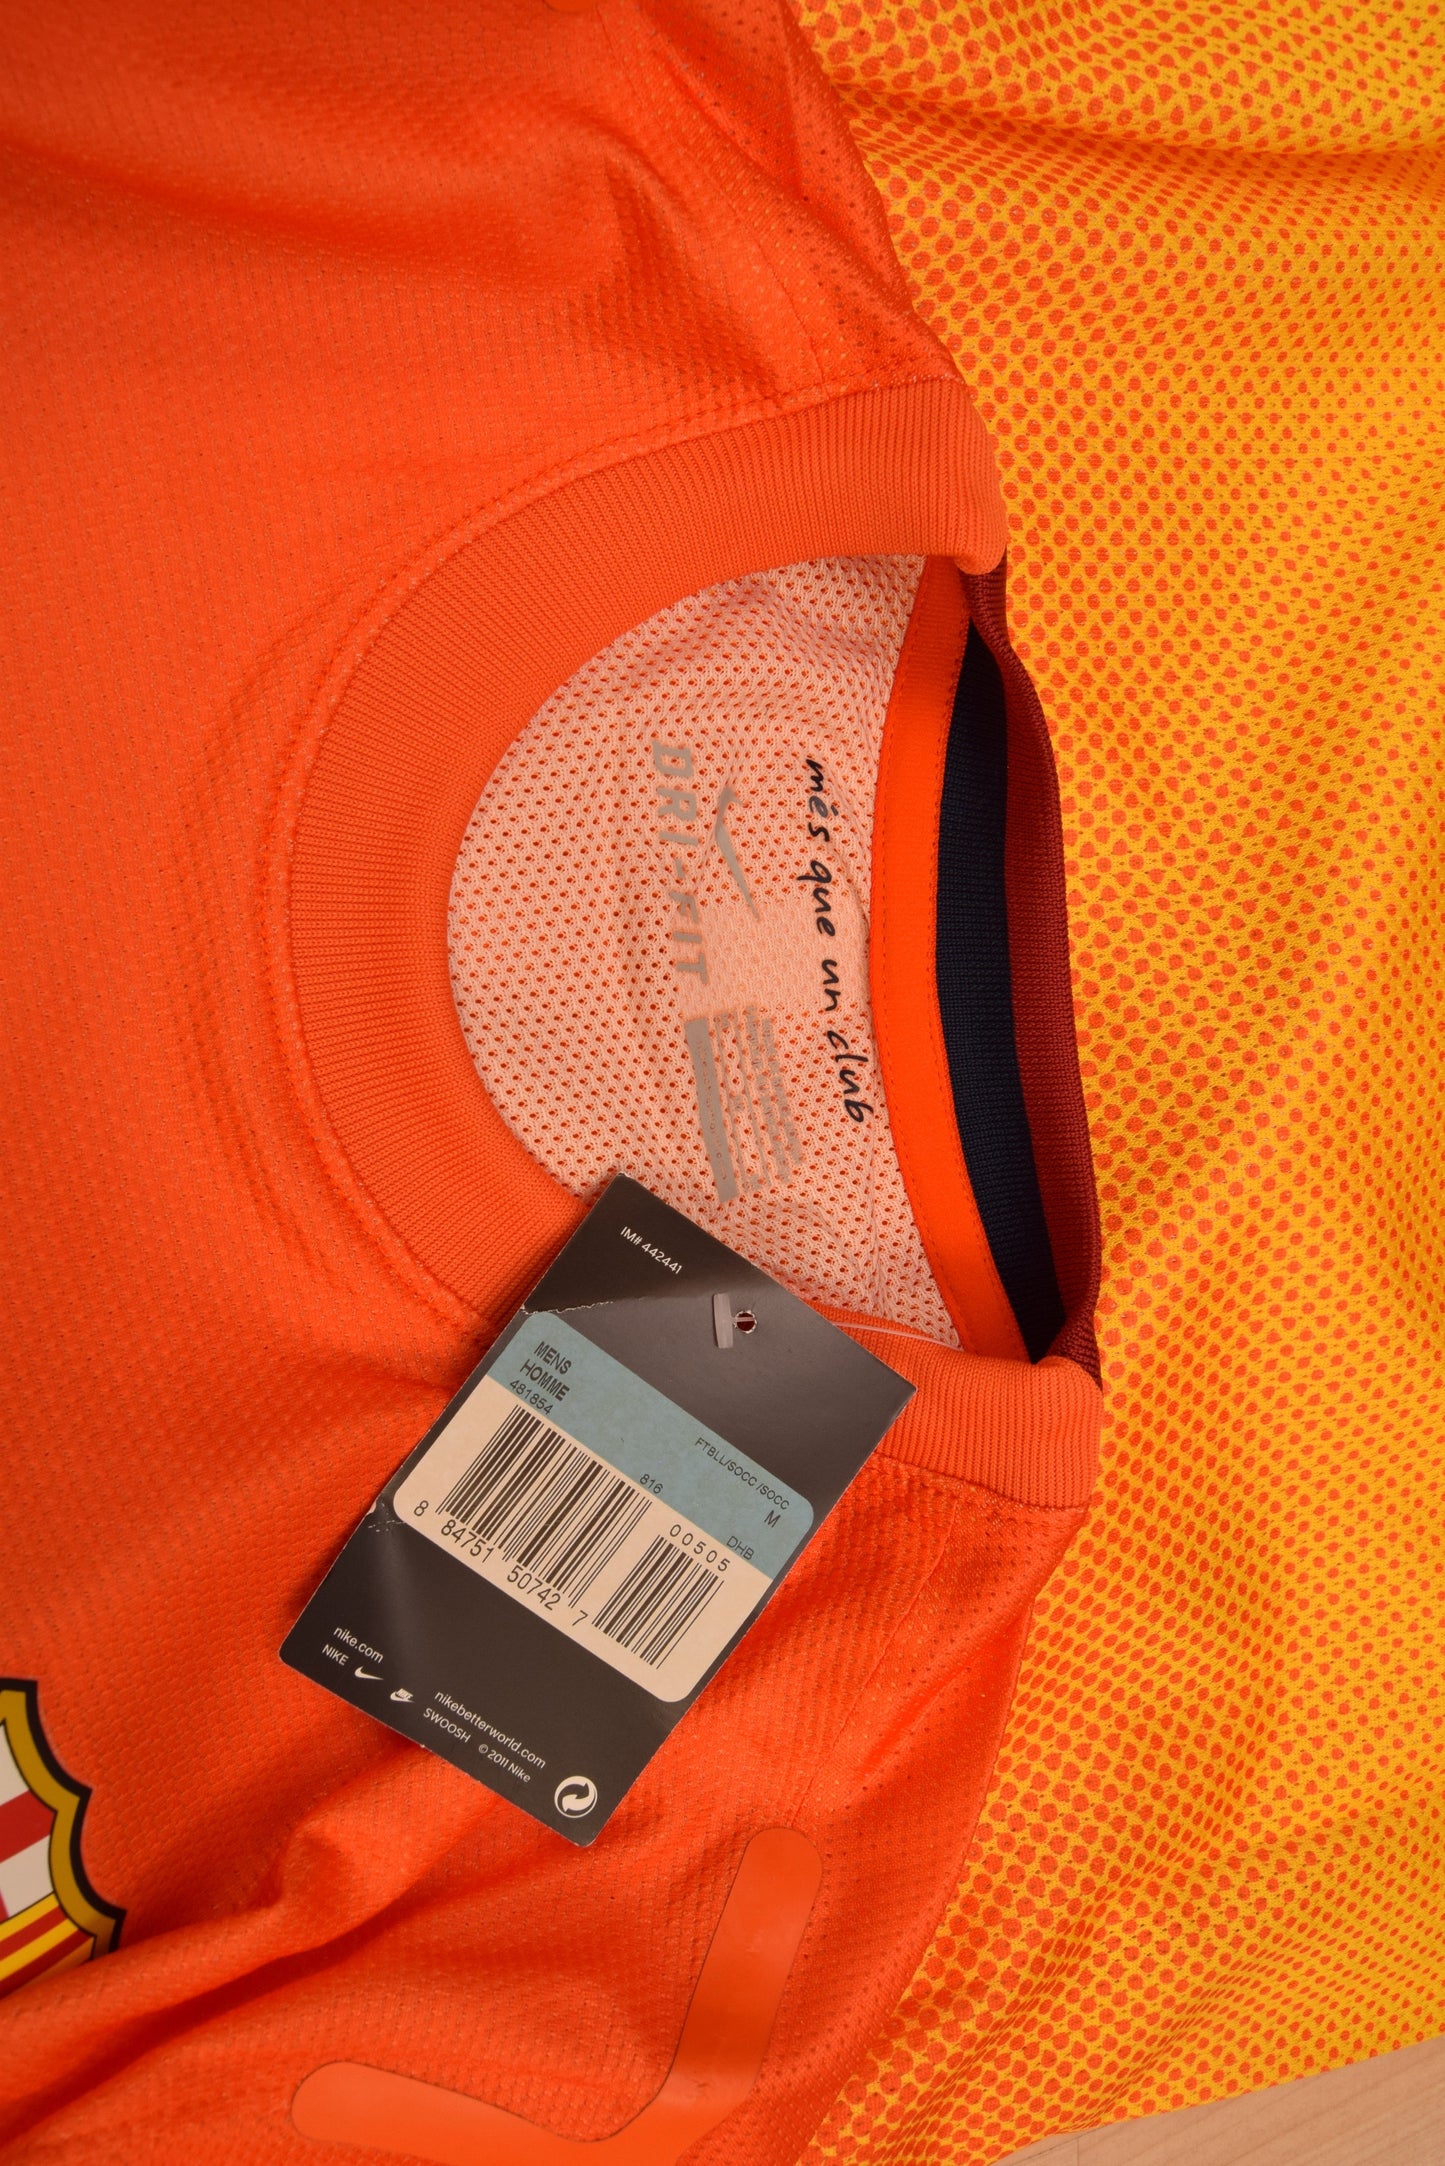 Authentic New FC Barcelona Nike DRI FIT Player Issue 2012 2013 Away Football Shirt BNWT Deadstock Qatar Foundation Orange Yellow Size M